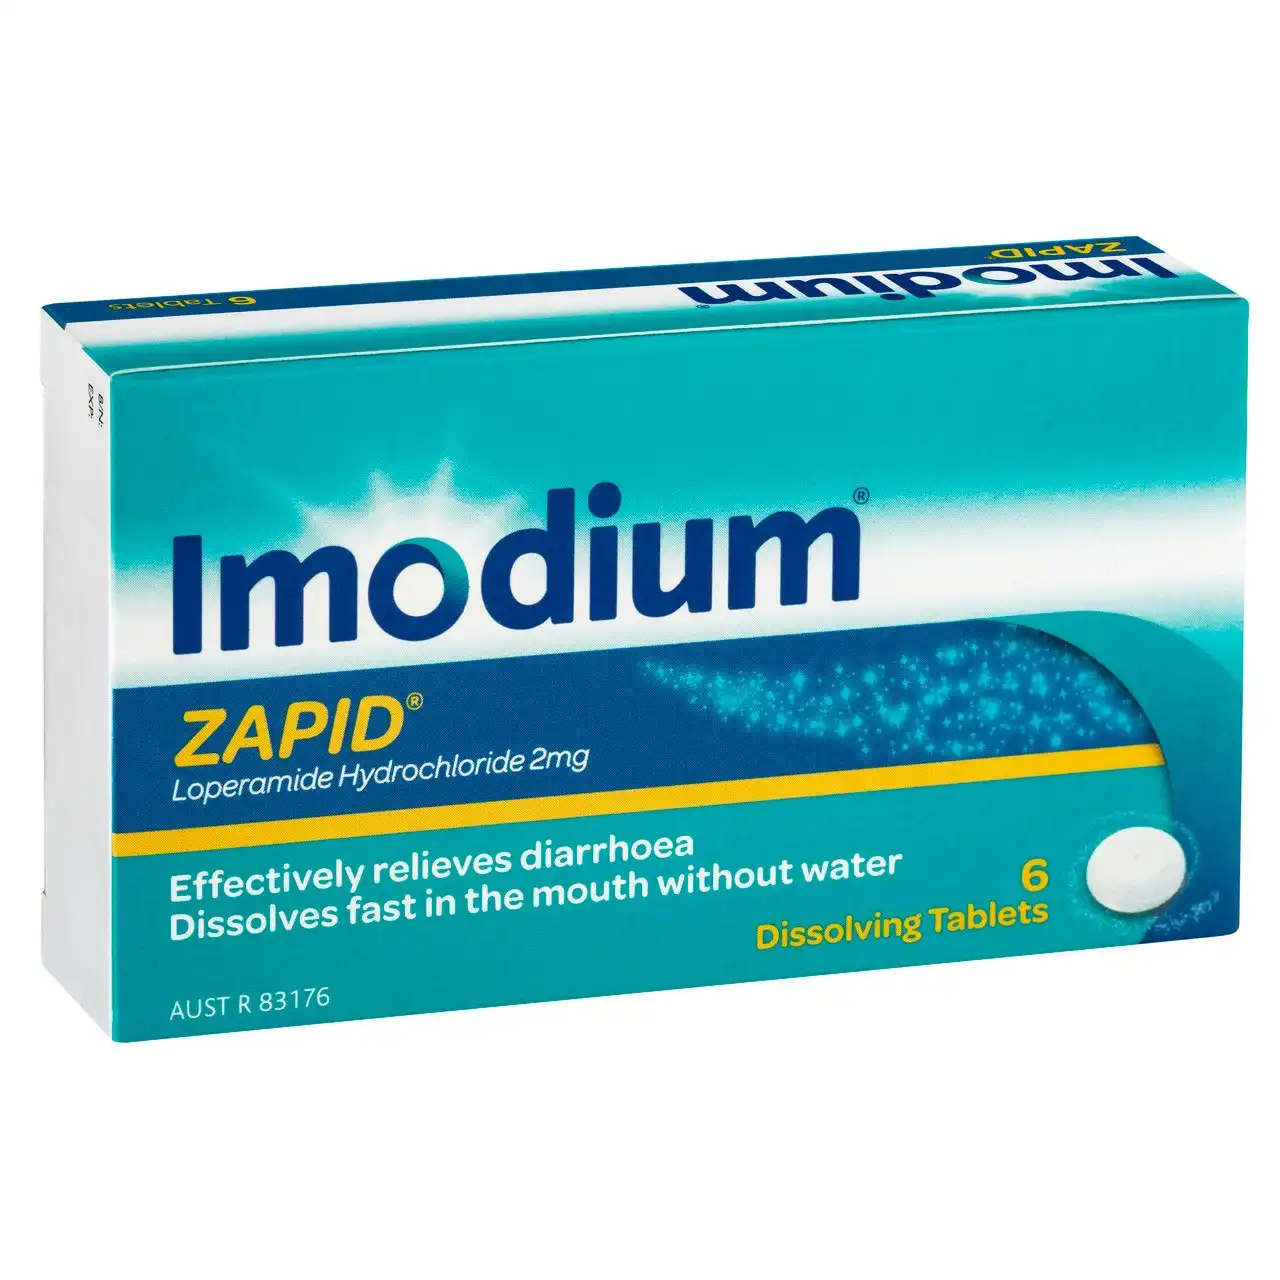 IMODIUM Zapid Diarrhoea Relief Dissolving Tablets 6 Pack